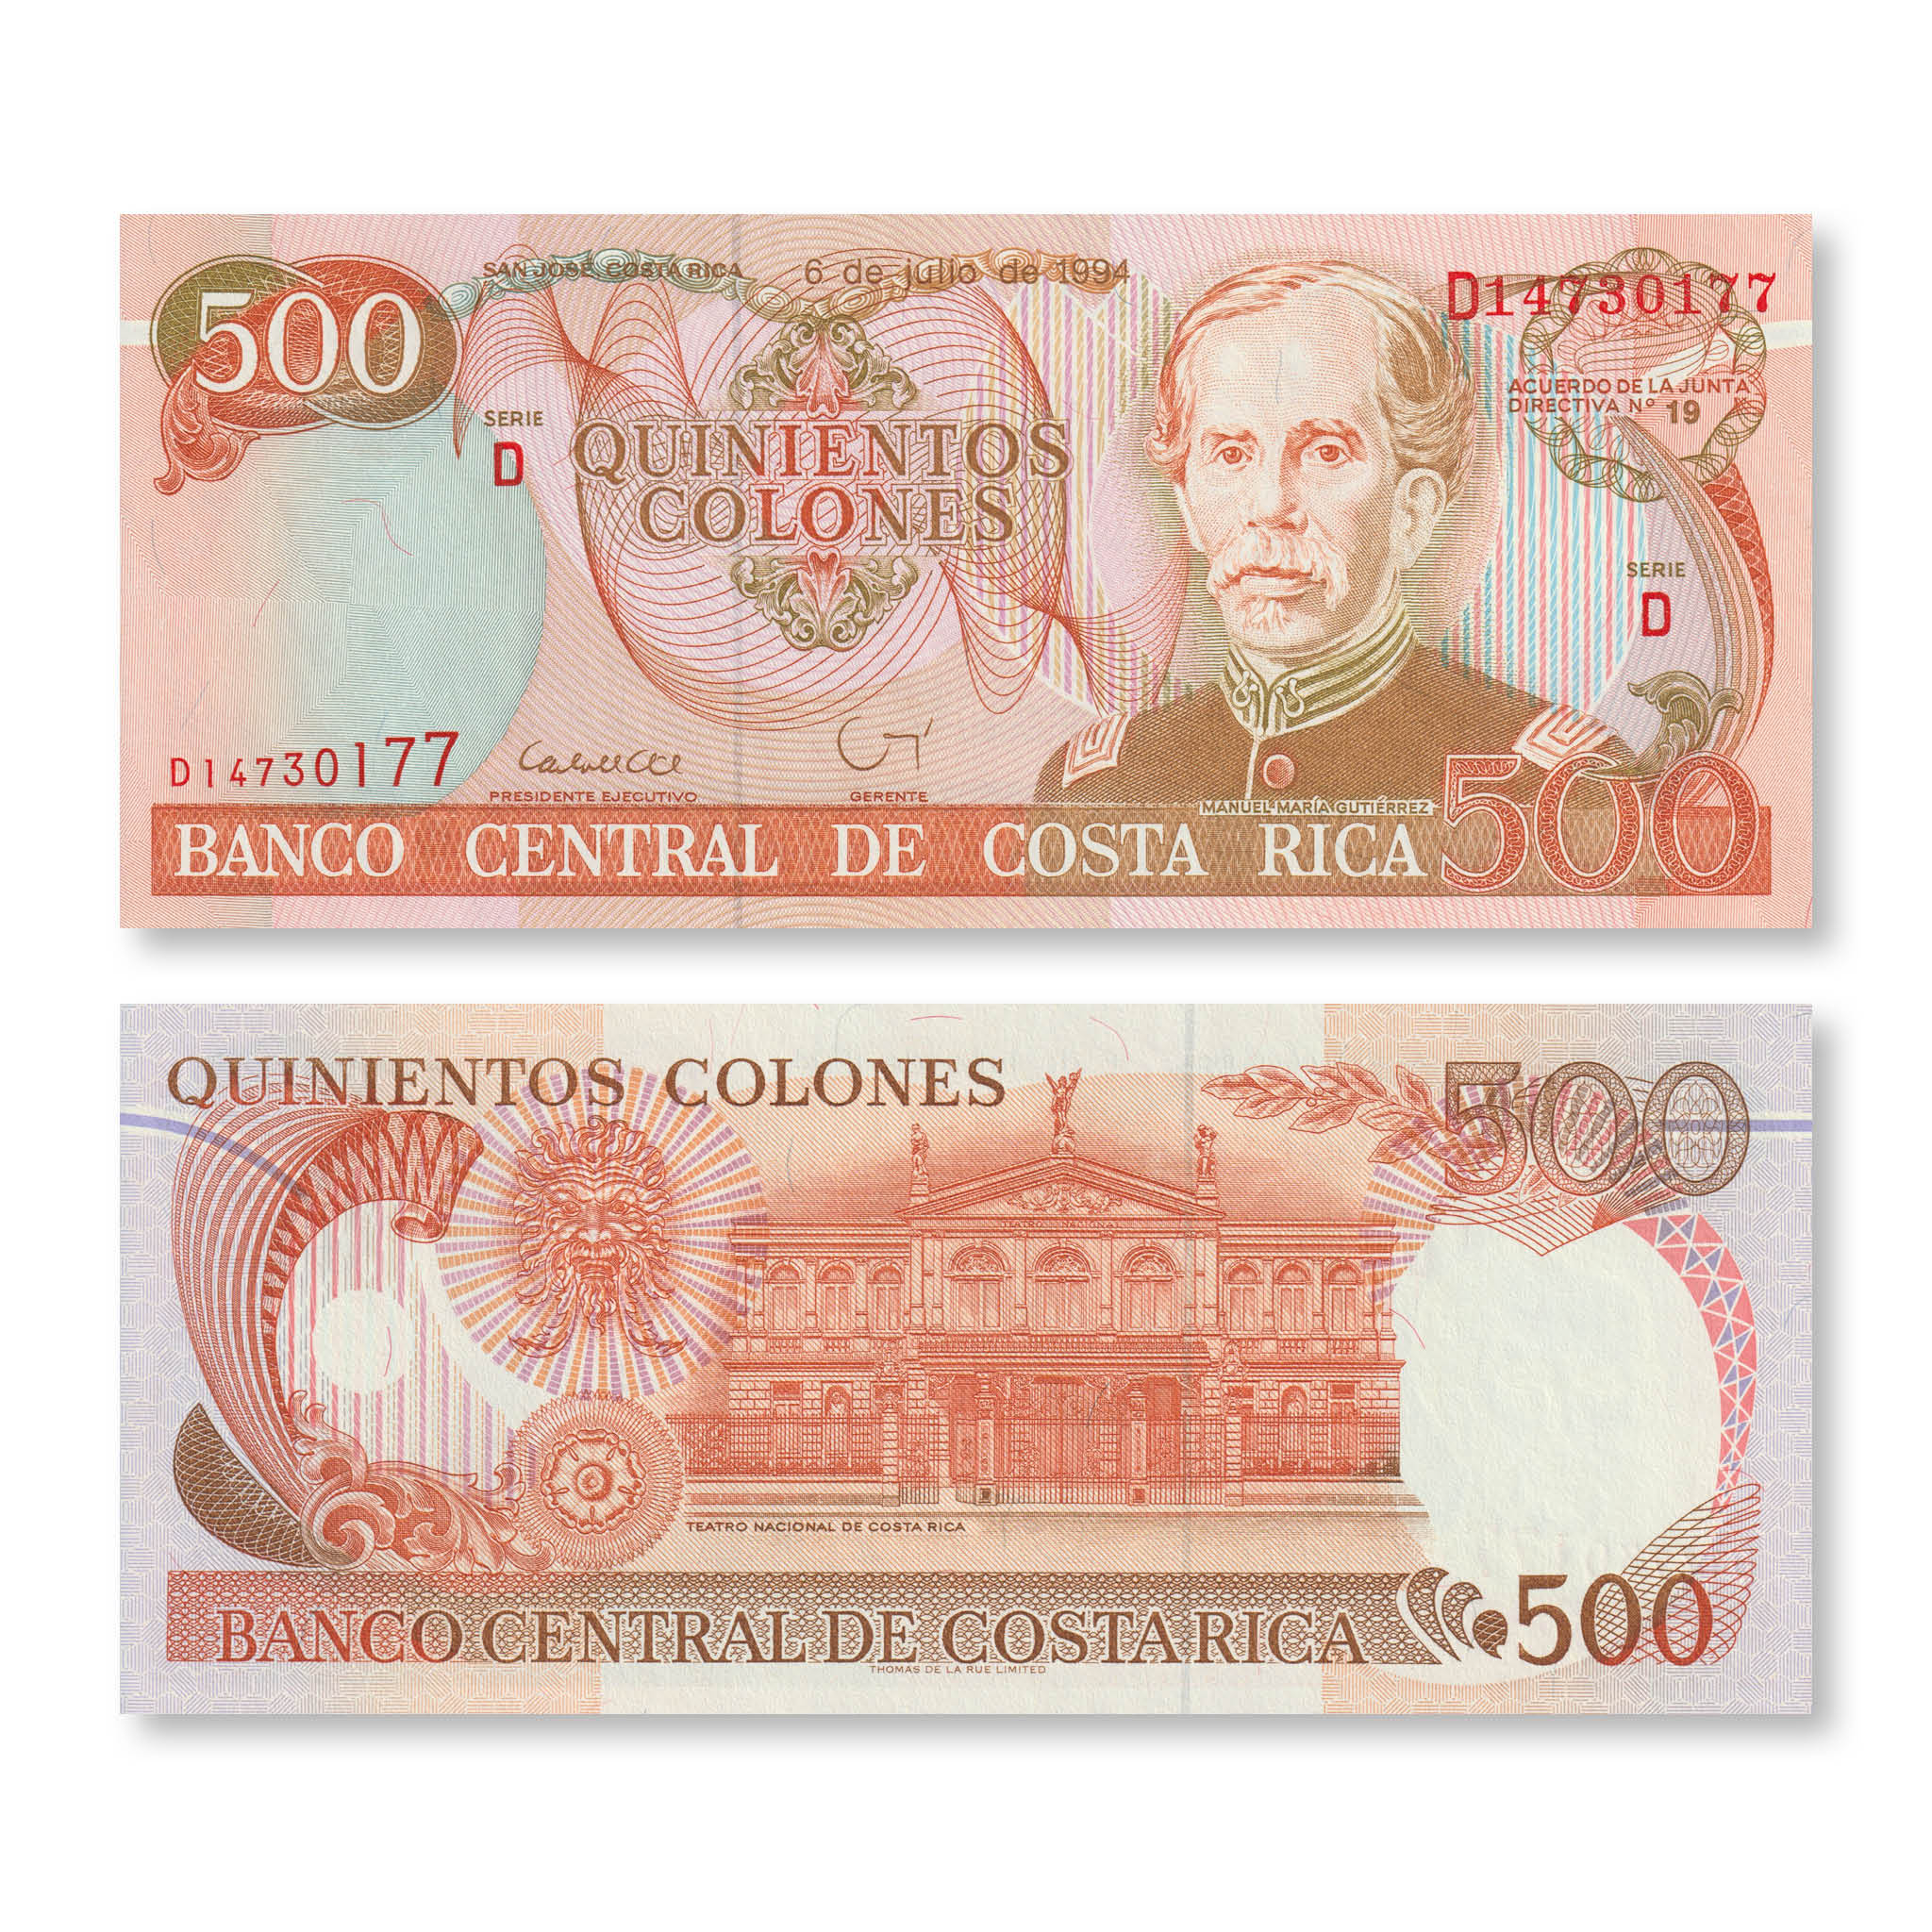 Costa Rica 500 Colones, 1994, B543a, P262a, UNC - Robert's World Money - World Banknotes